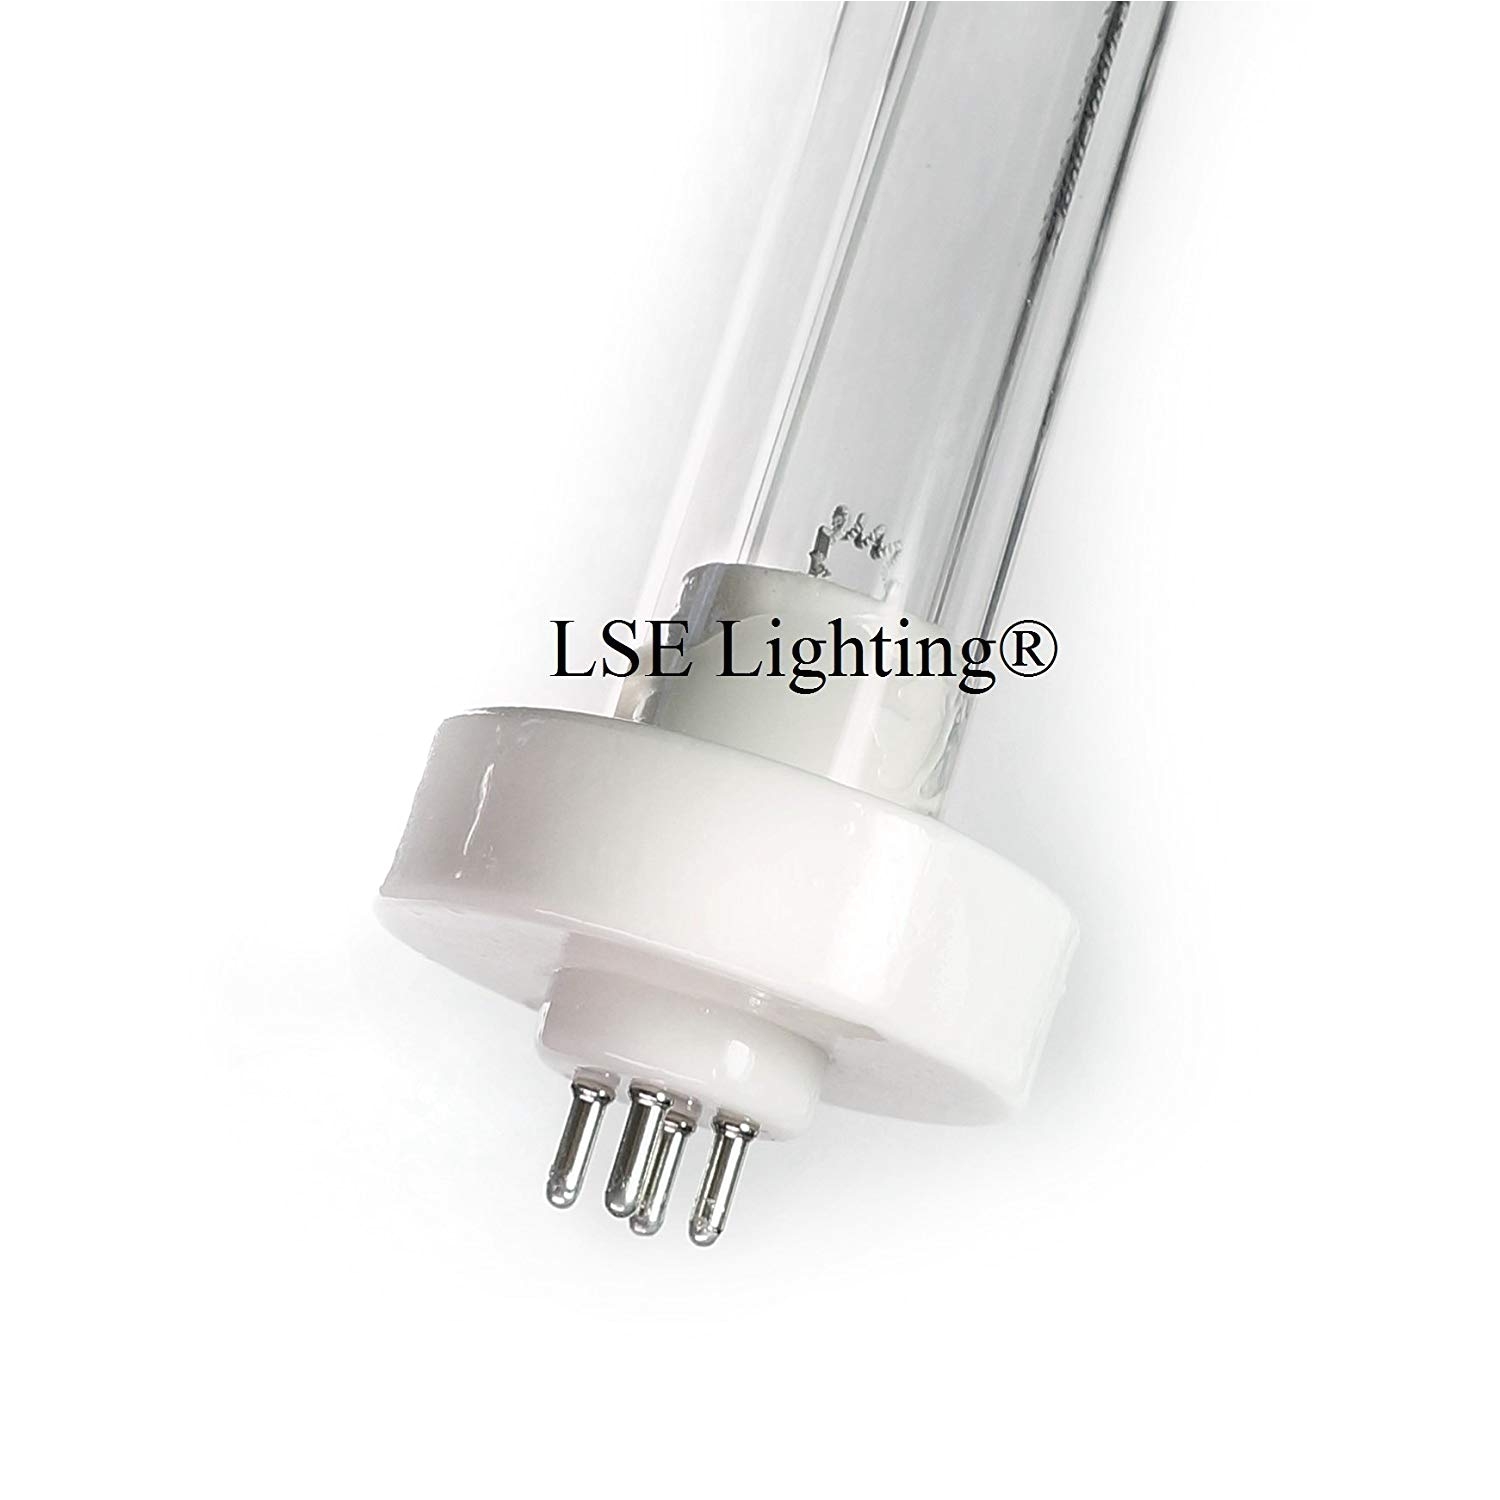 Ultravation Uv Light Amazon Com asih1001 Uv Air Lamp assembly 12 T3 by Lse Lighting